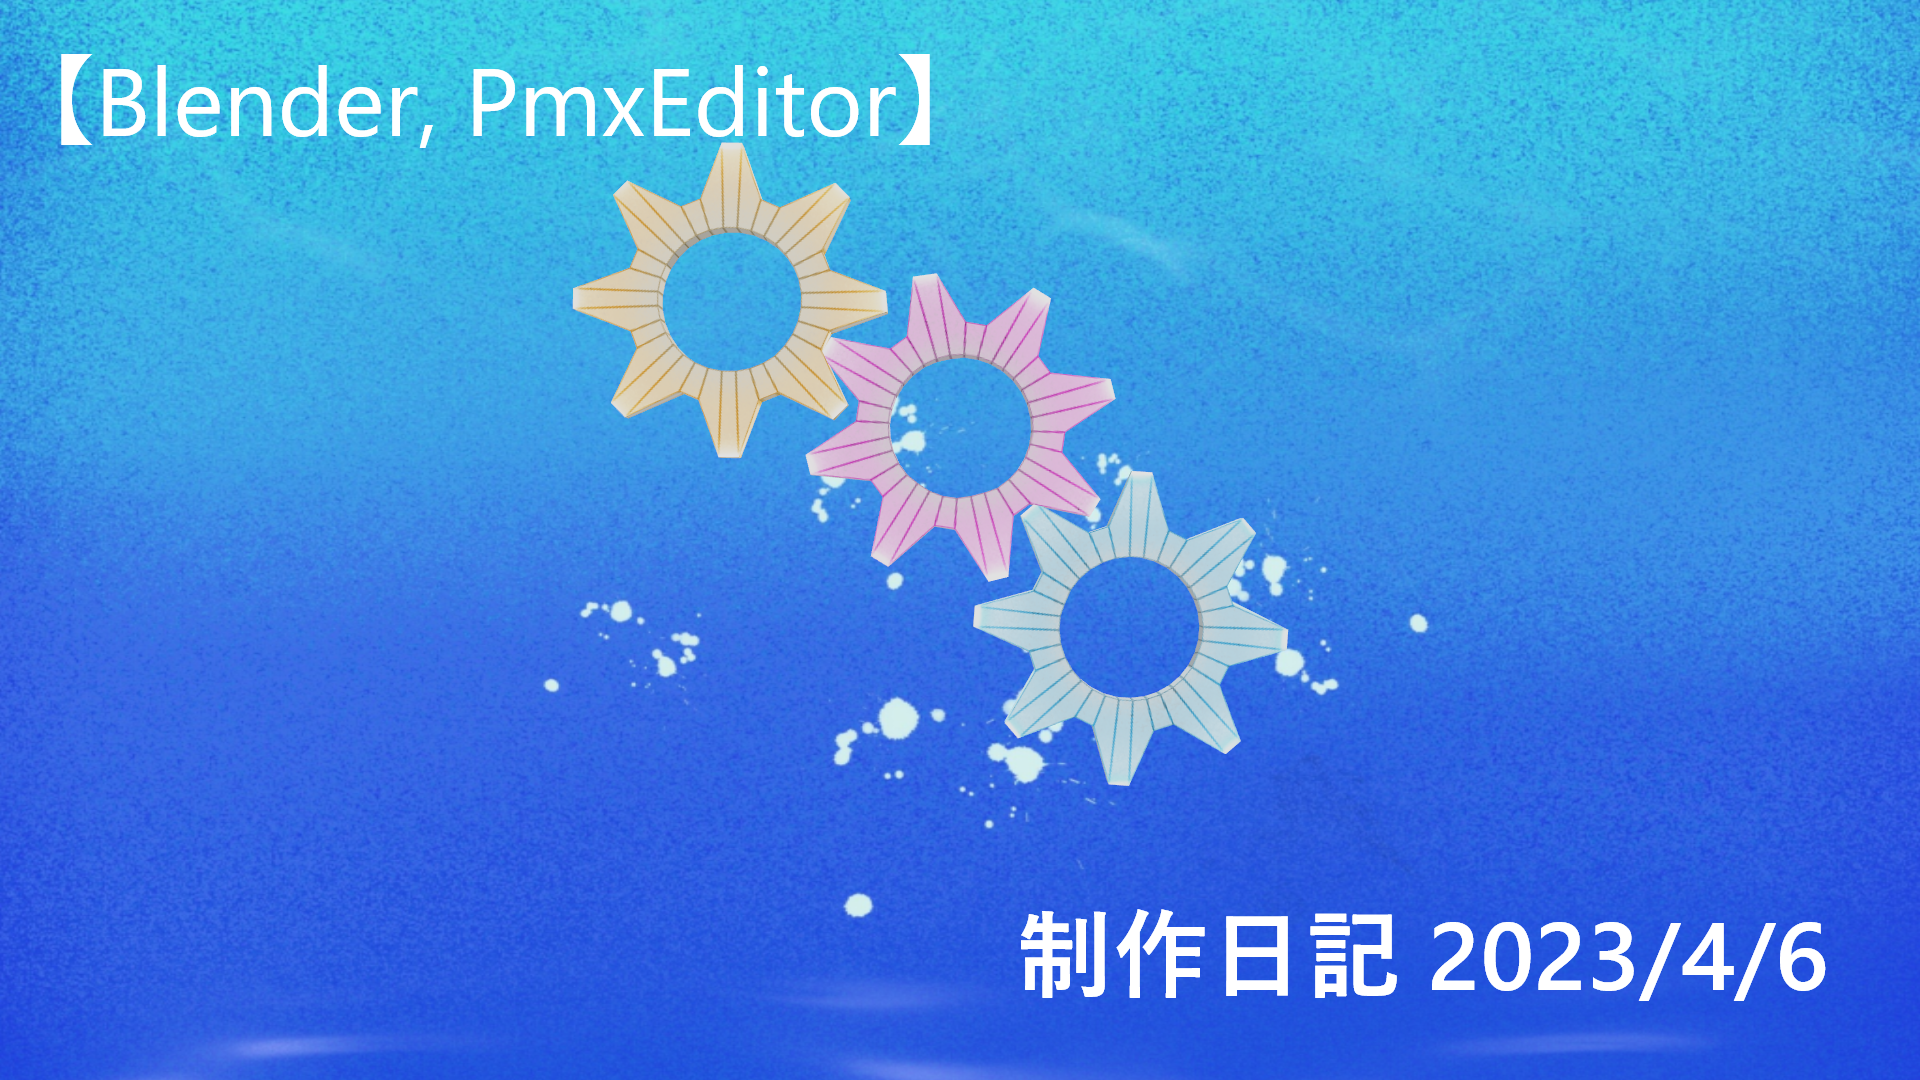 【Blender, PmxEditor】制作日記 2023/4/6